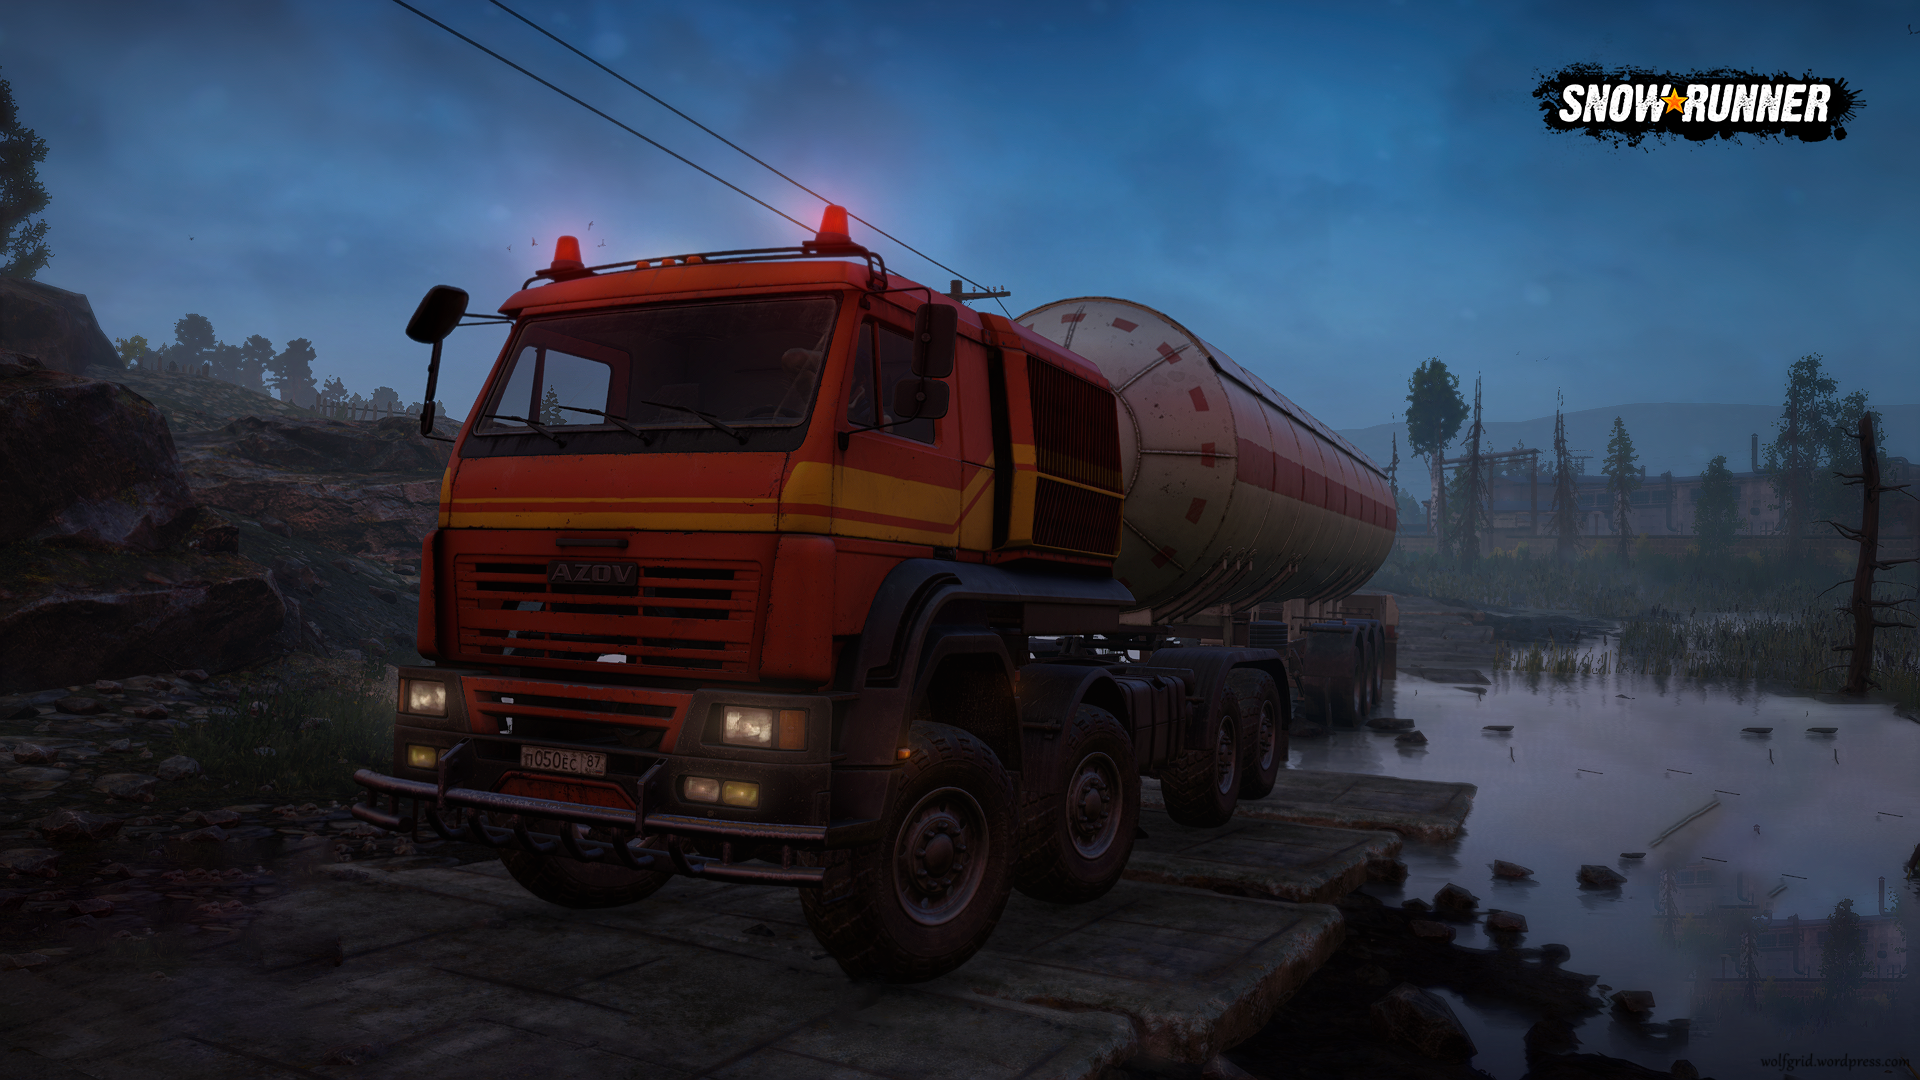 General 1920x1080 Snowrunner Epic Games video games truck PC gaming Red Truck screen shot vehicle Kamaz